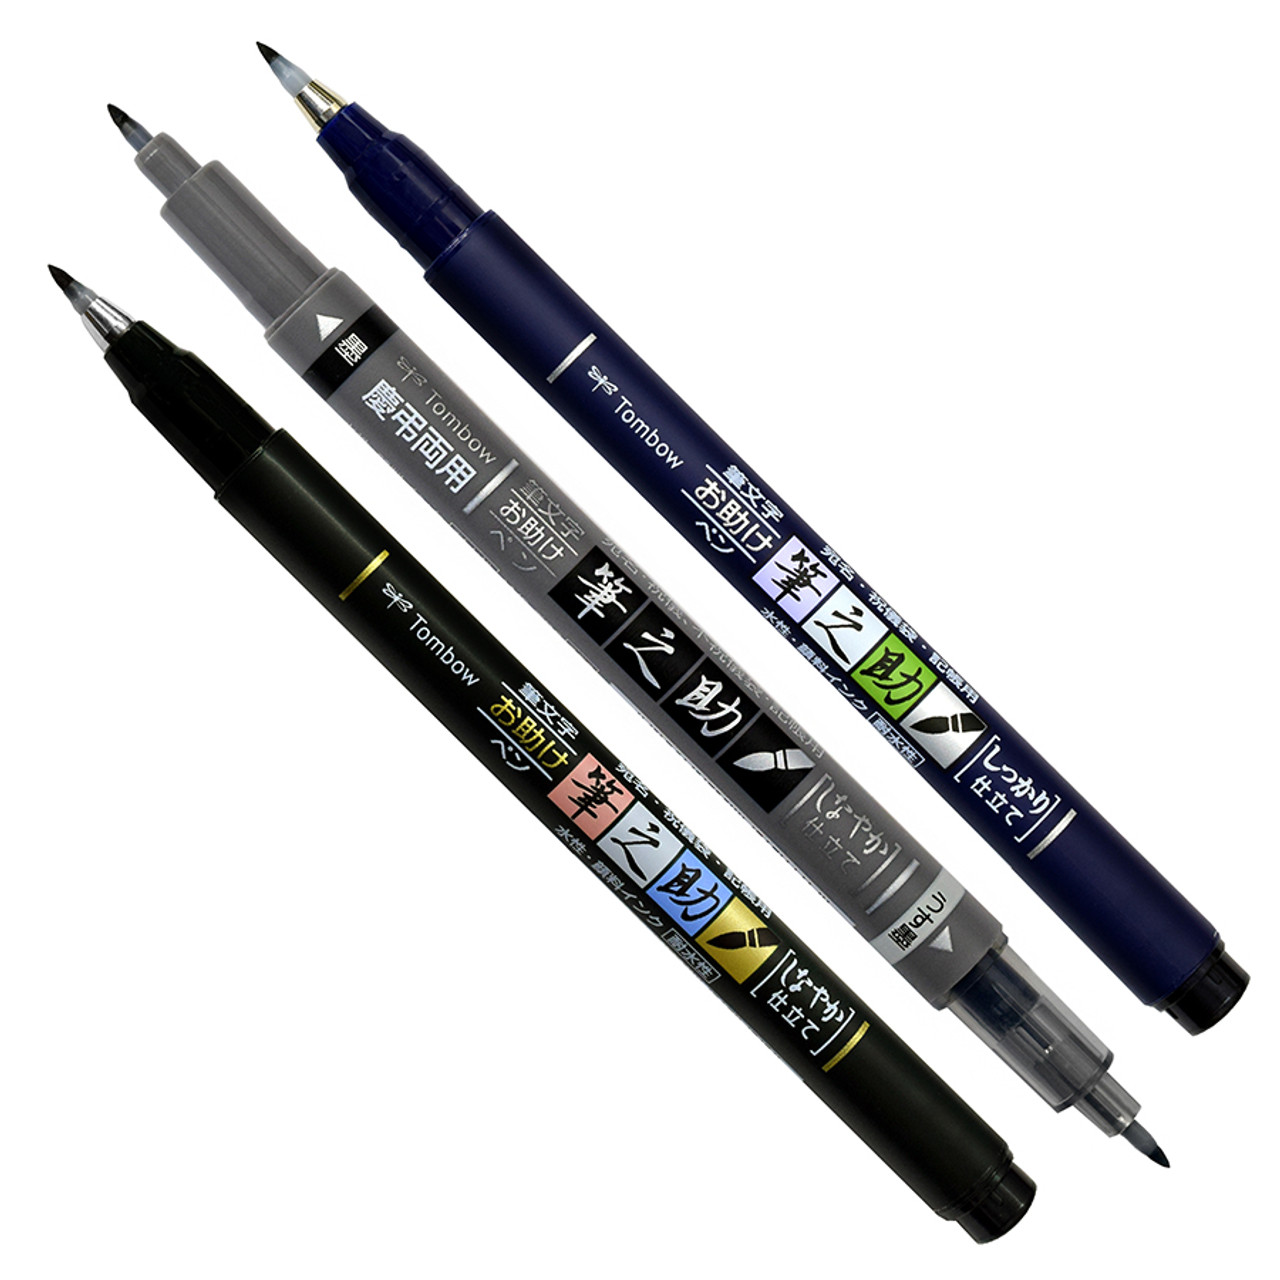 Tombow Fudenosuke Brush Pens Review * sparkle living blog